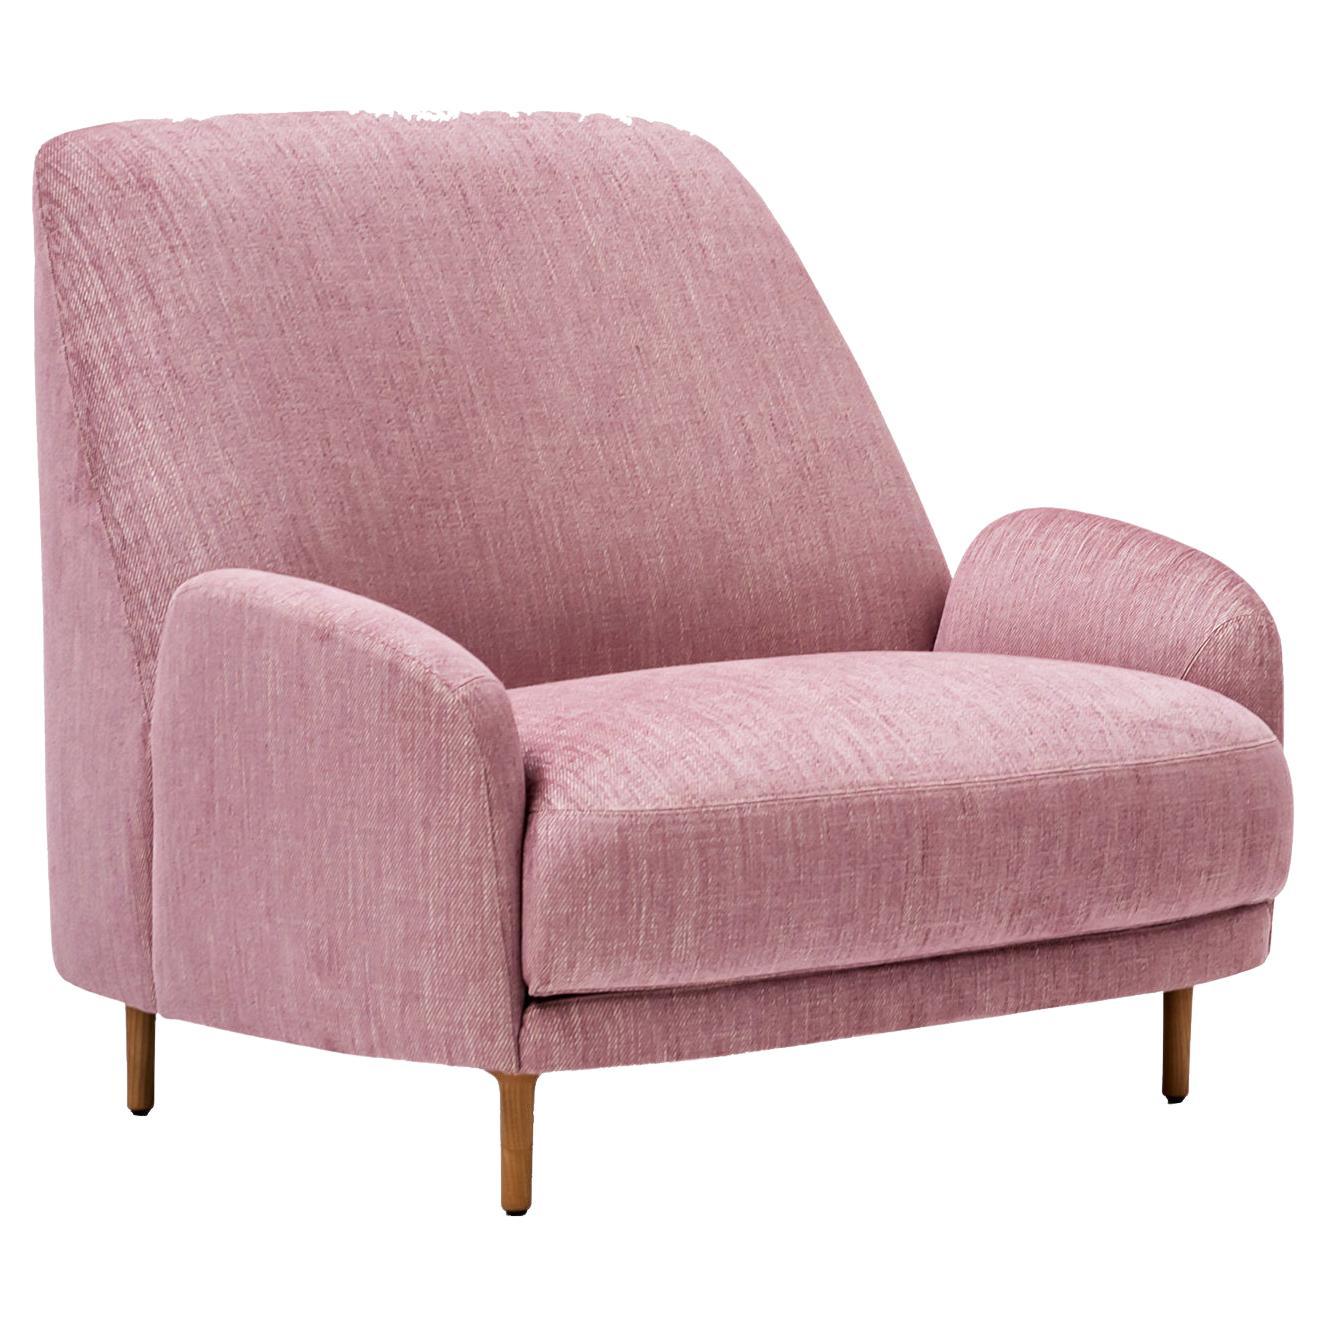 Santiago Pink Armchair by Claesson Koivisto Rune